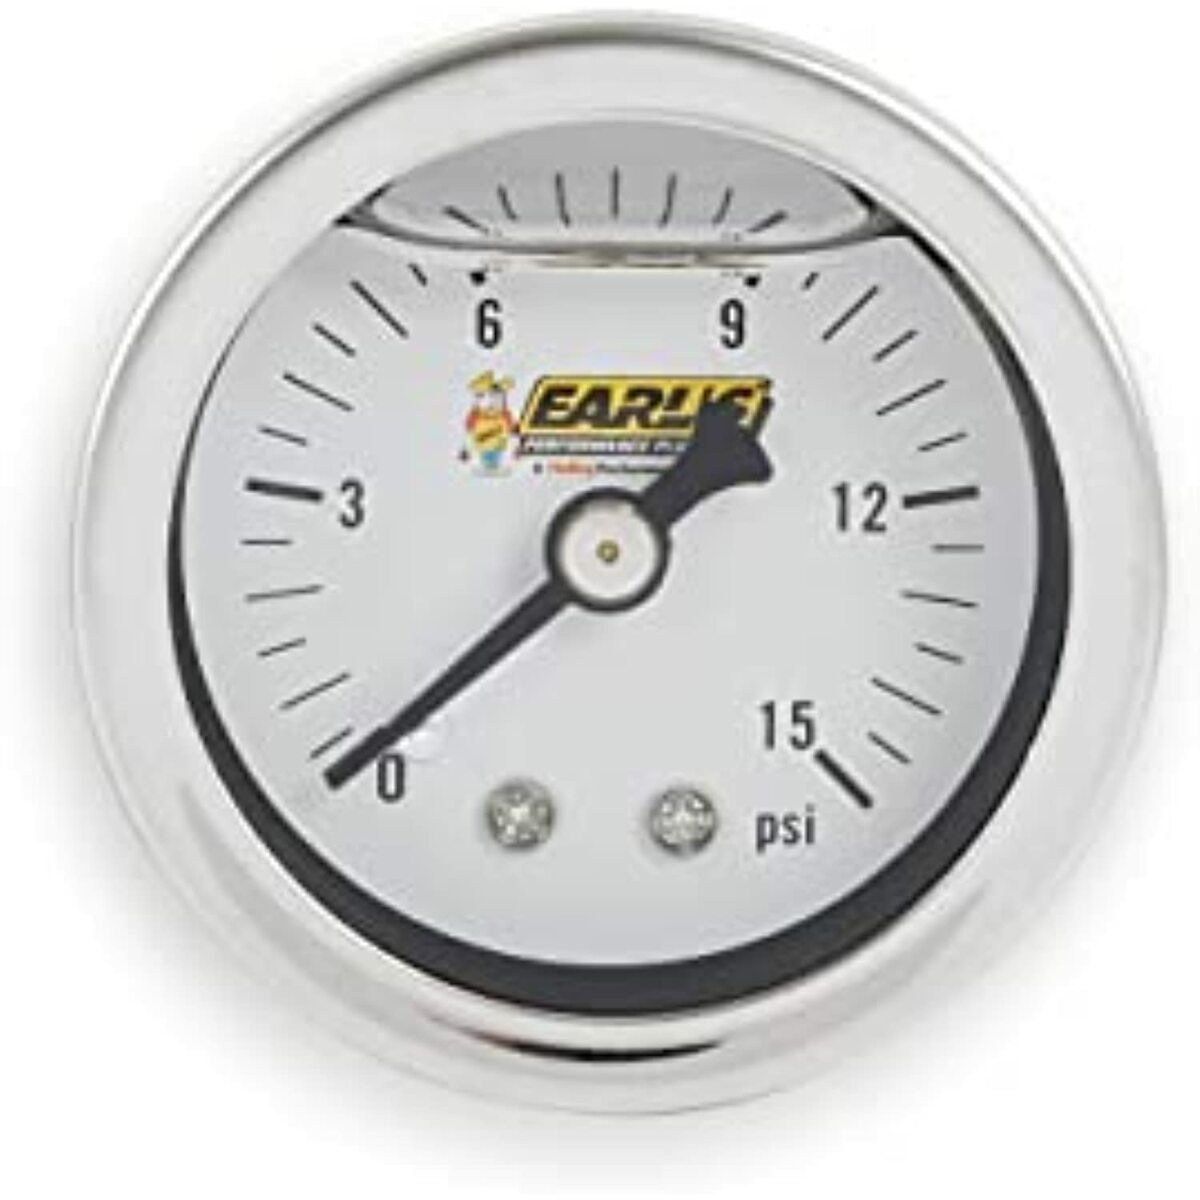 Billet Bypass Fuel Pressure Regulator Kit 15-60 Psi W/Fittings & Gauge-12-846KIT